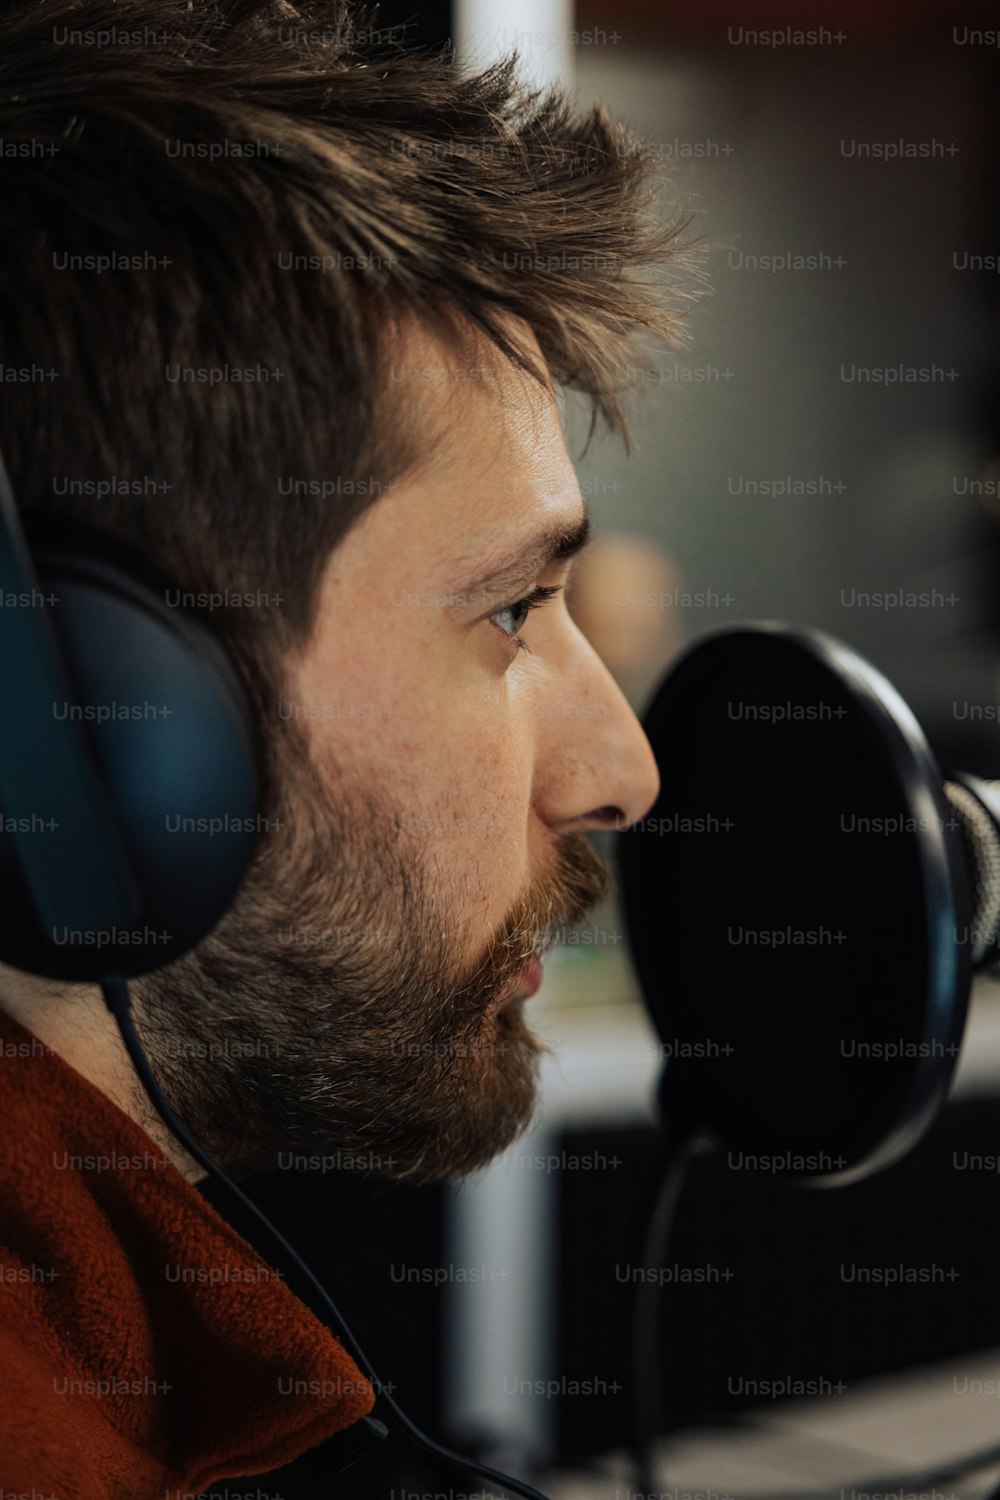 a man with a beard wearing headphones